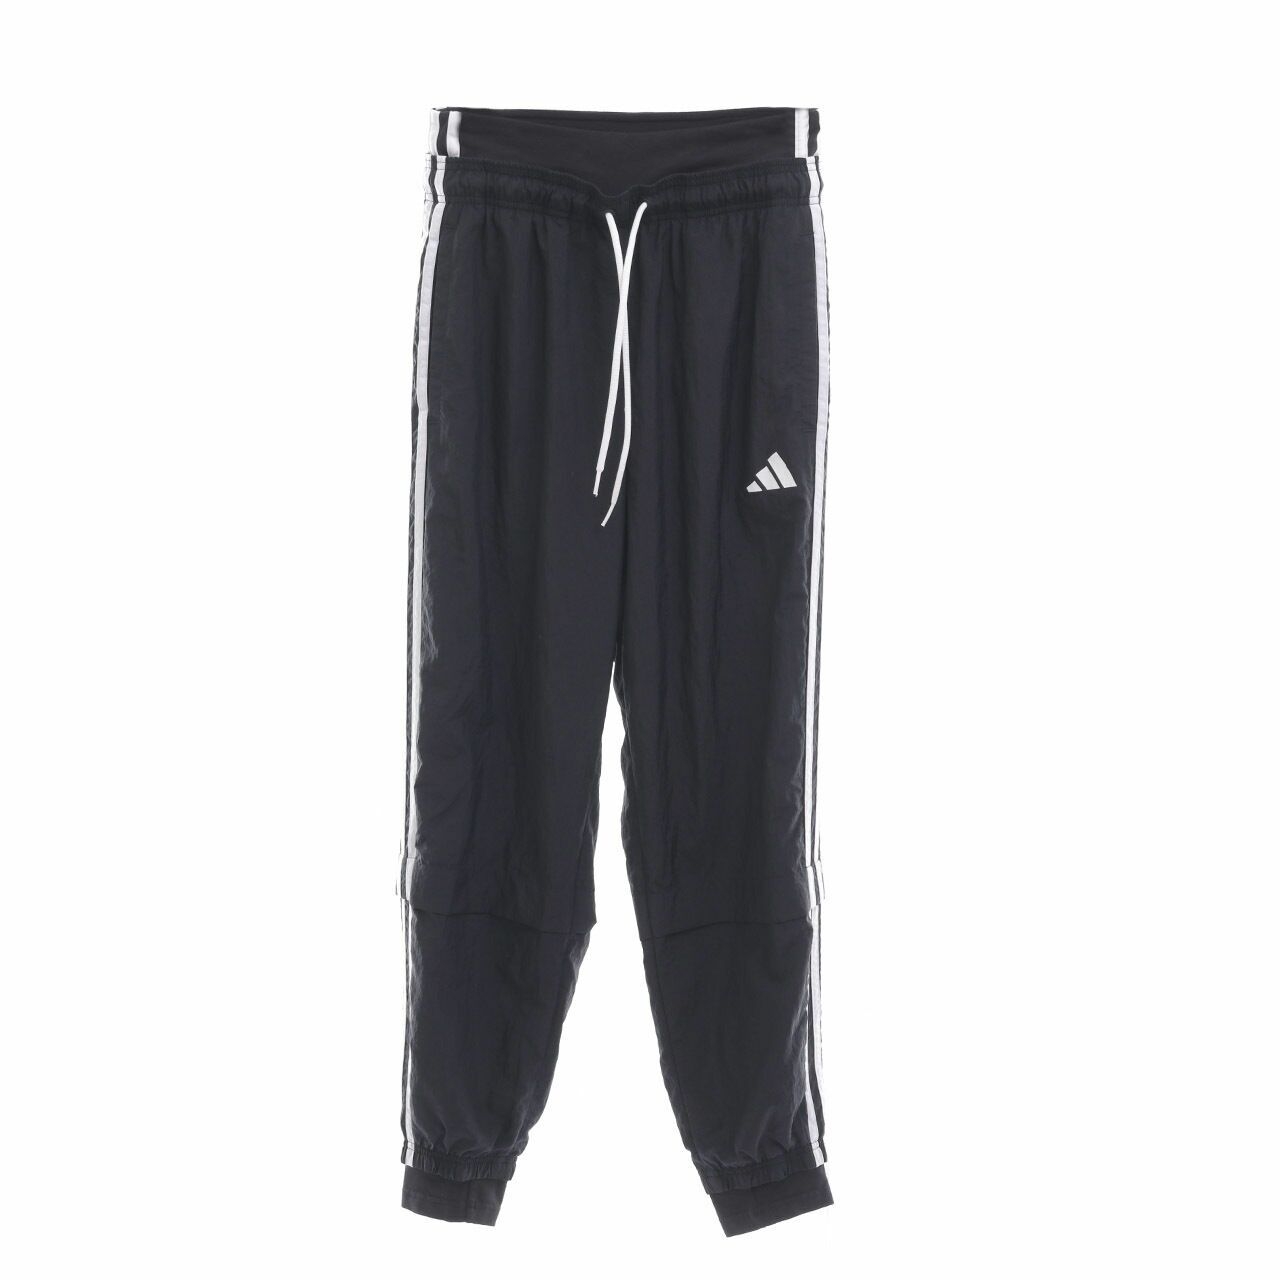 Adidas Black Stripes Long Pants